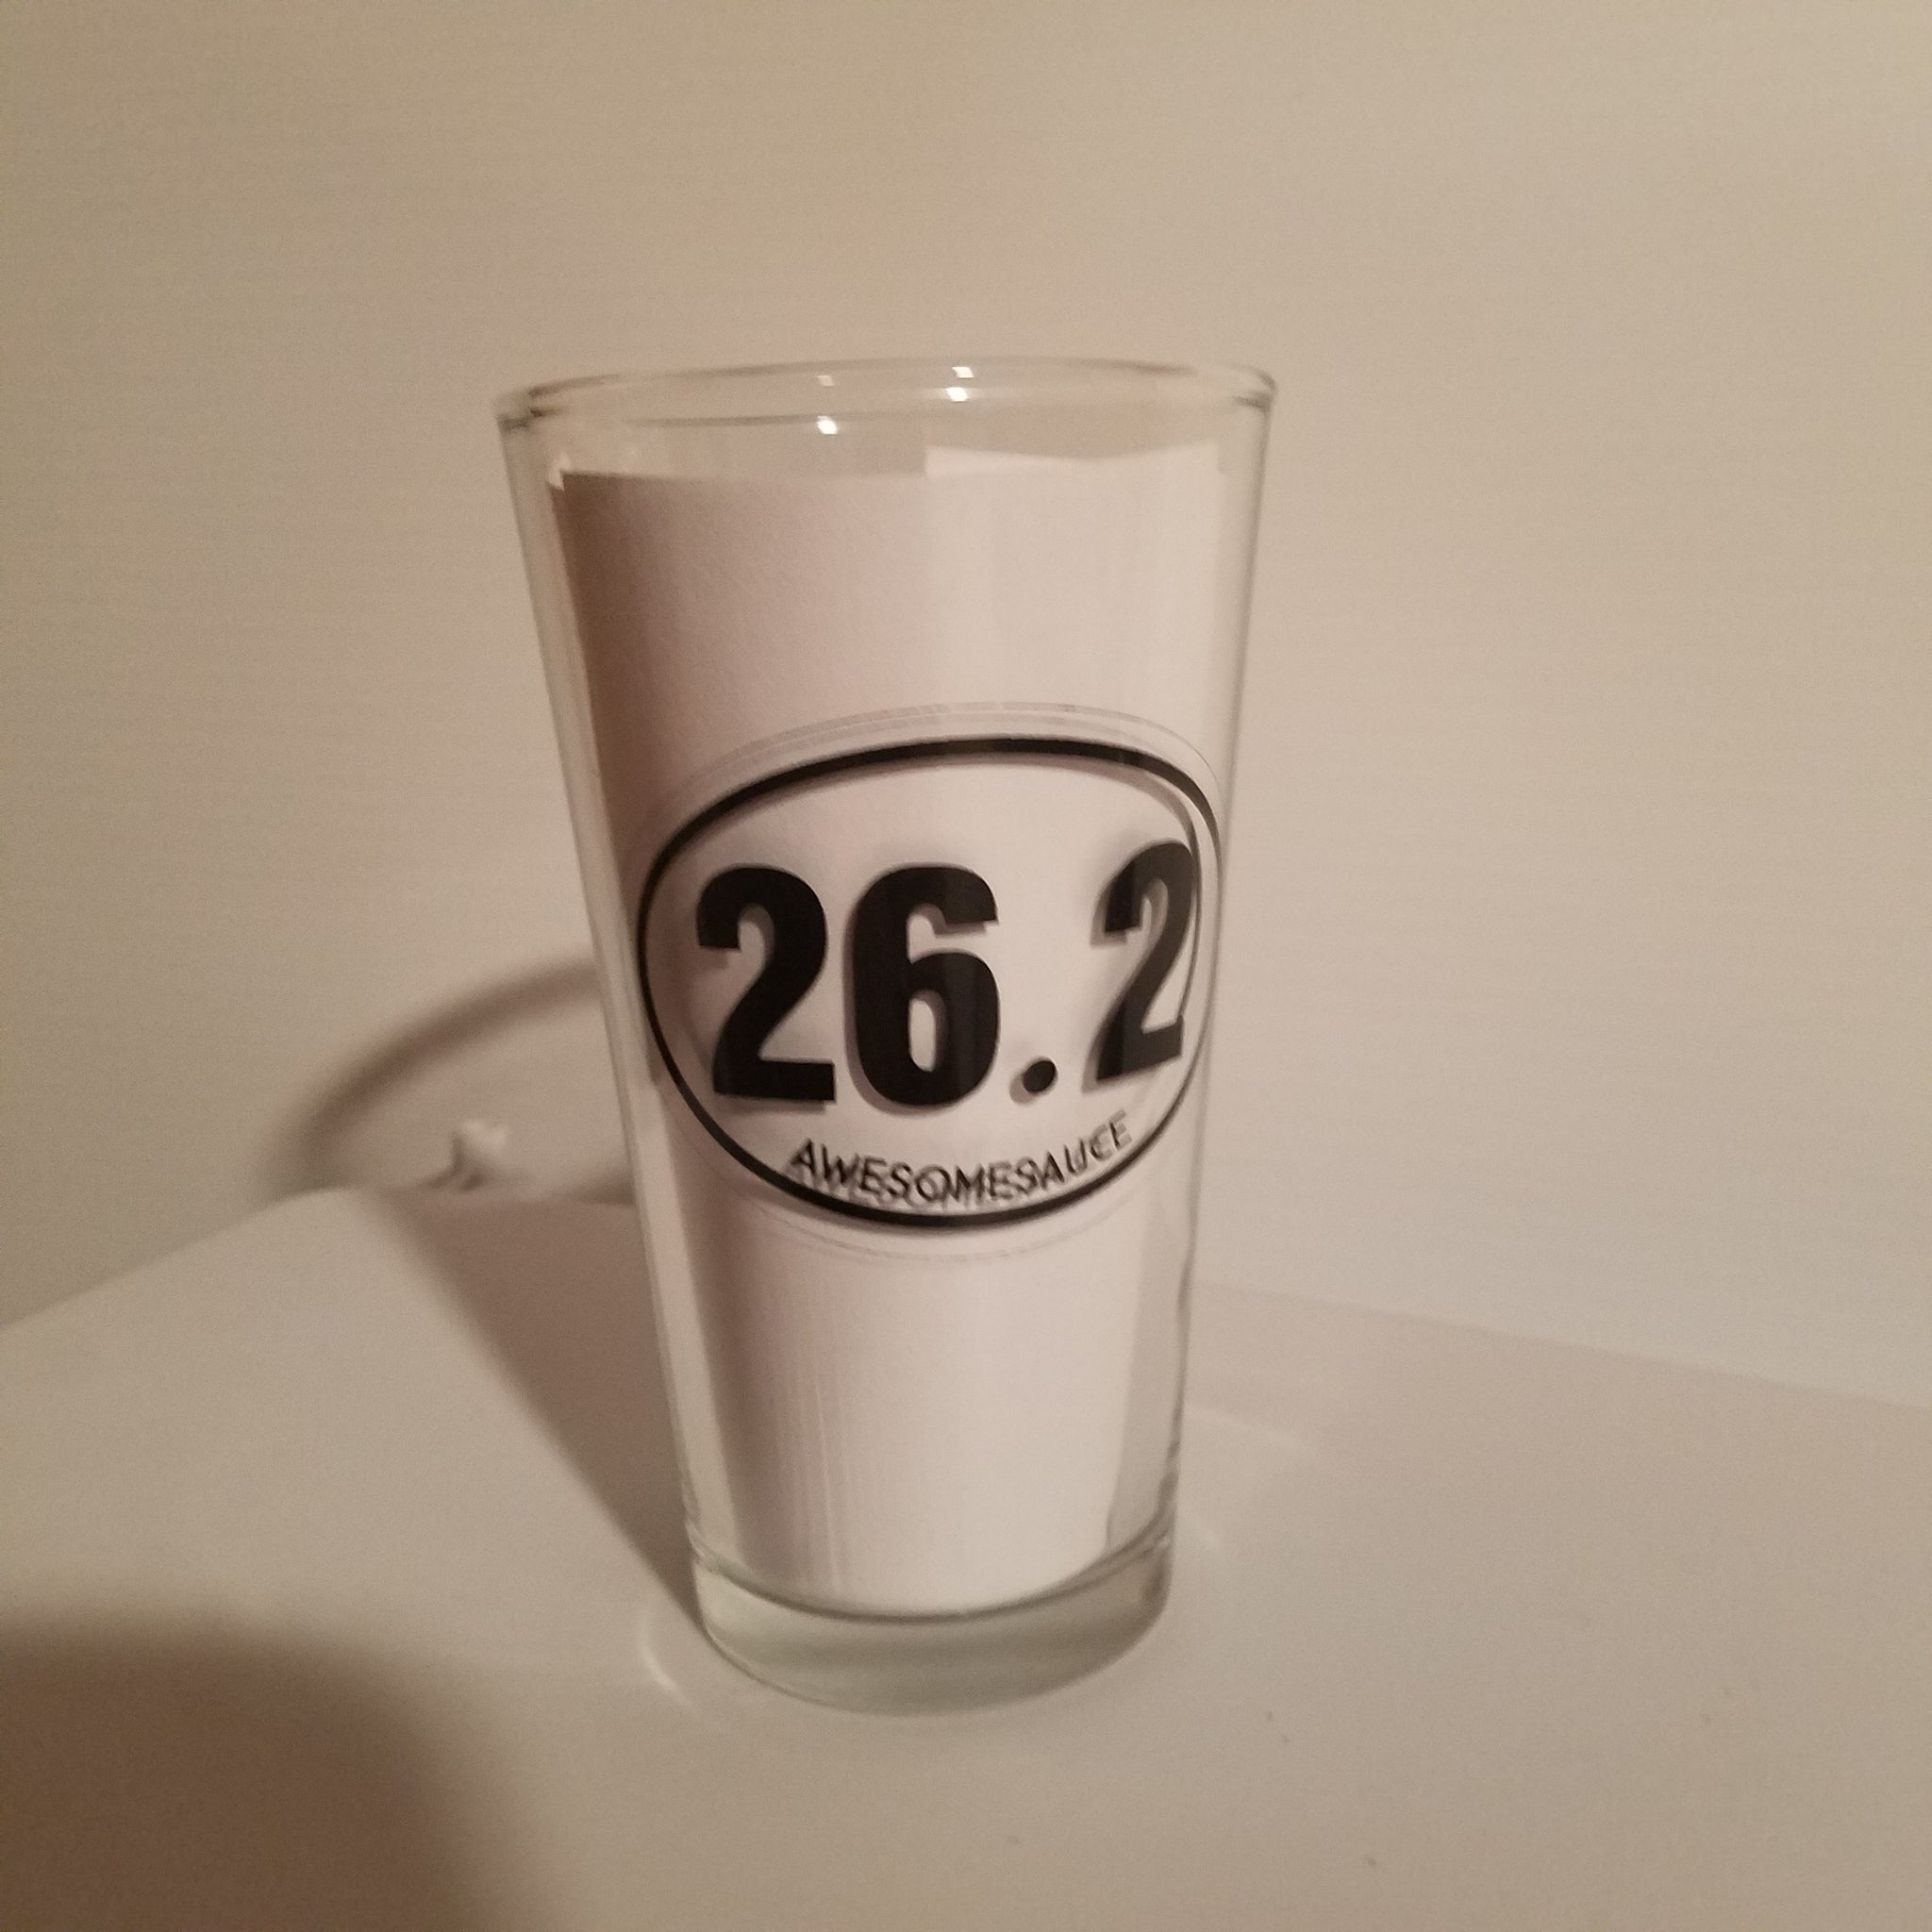 26.2 Pint Glass